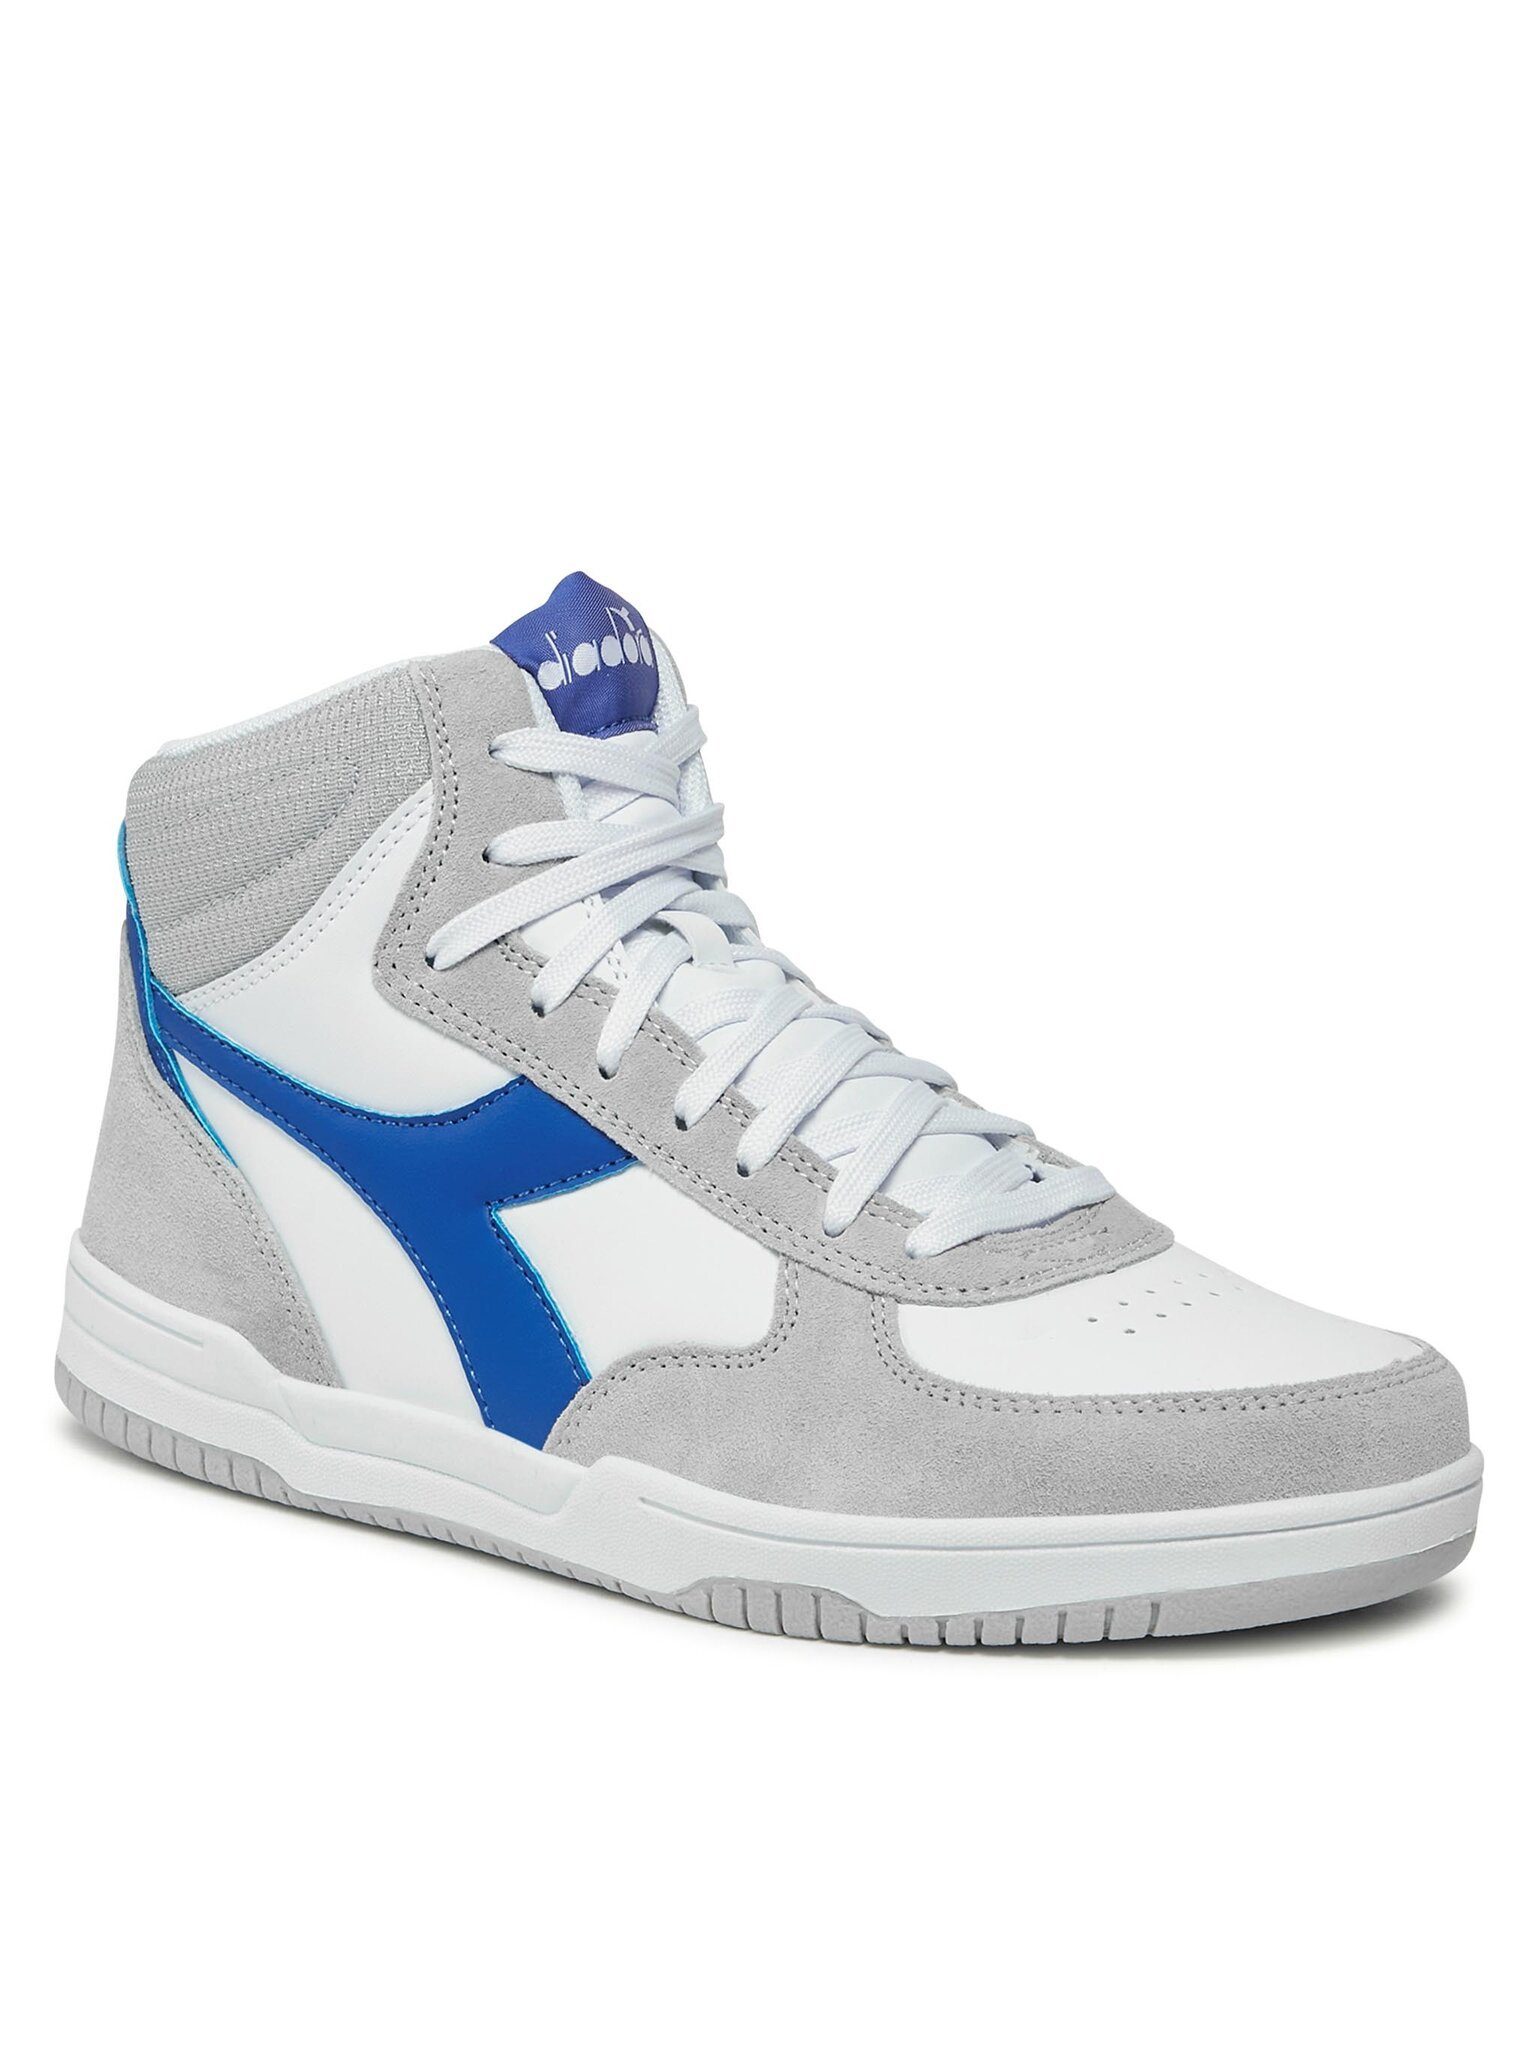 Diadora Sneakers Raptor High SL 101.178324-C3144 White / Imperial Blue Sneaker